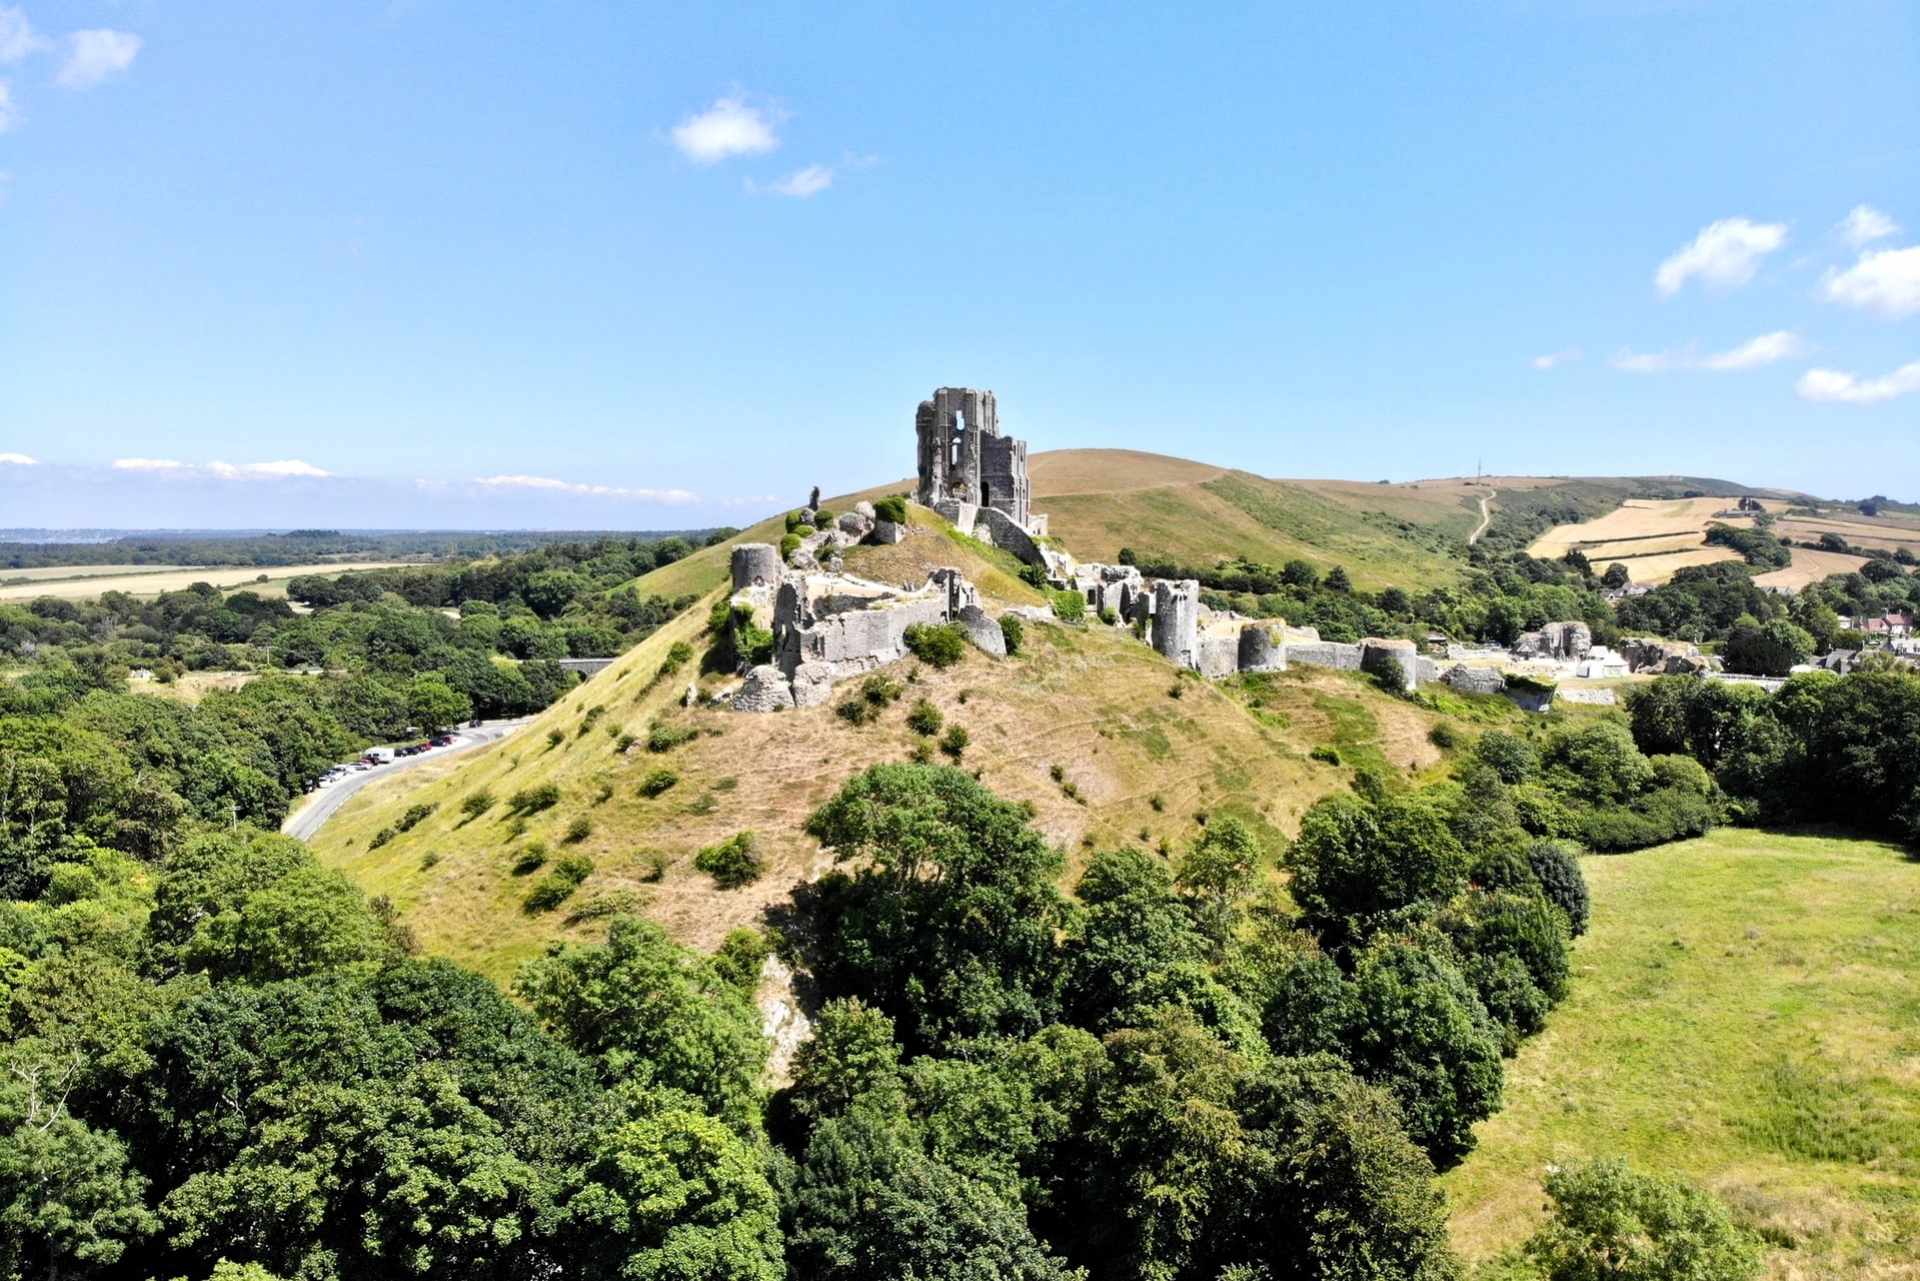 corfe-castle-sat-on-top-of-green-hill-in-summer-castles-in-dorset